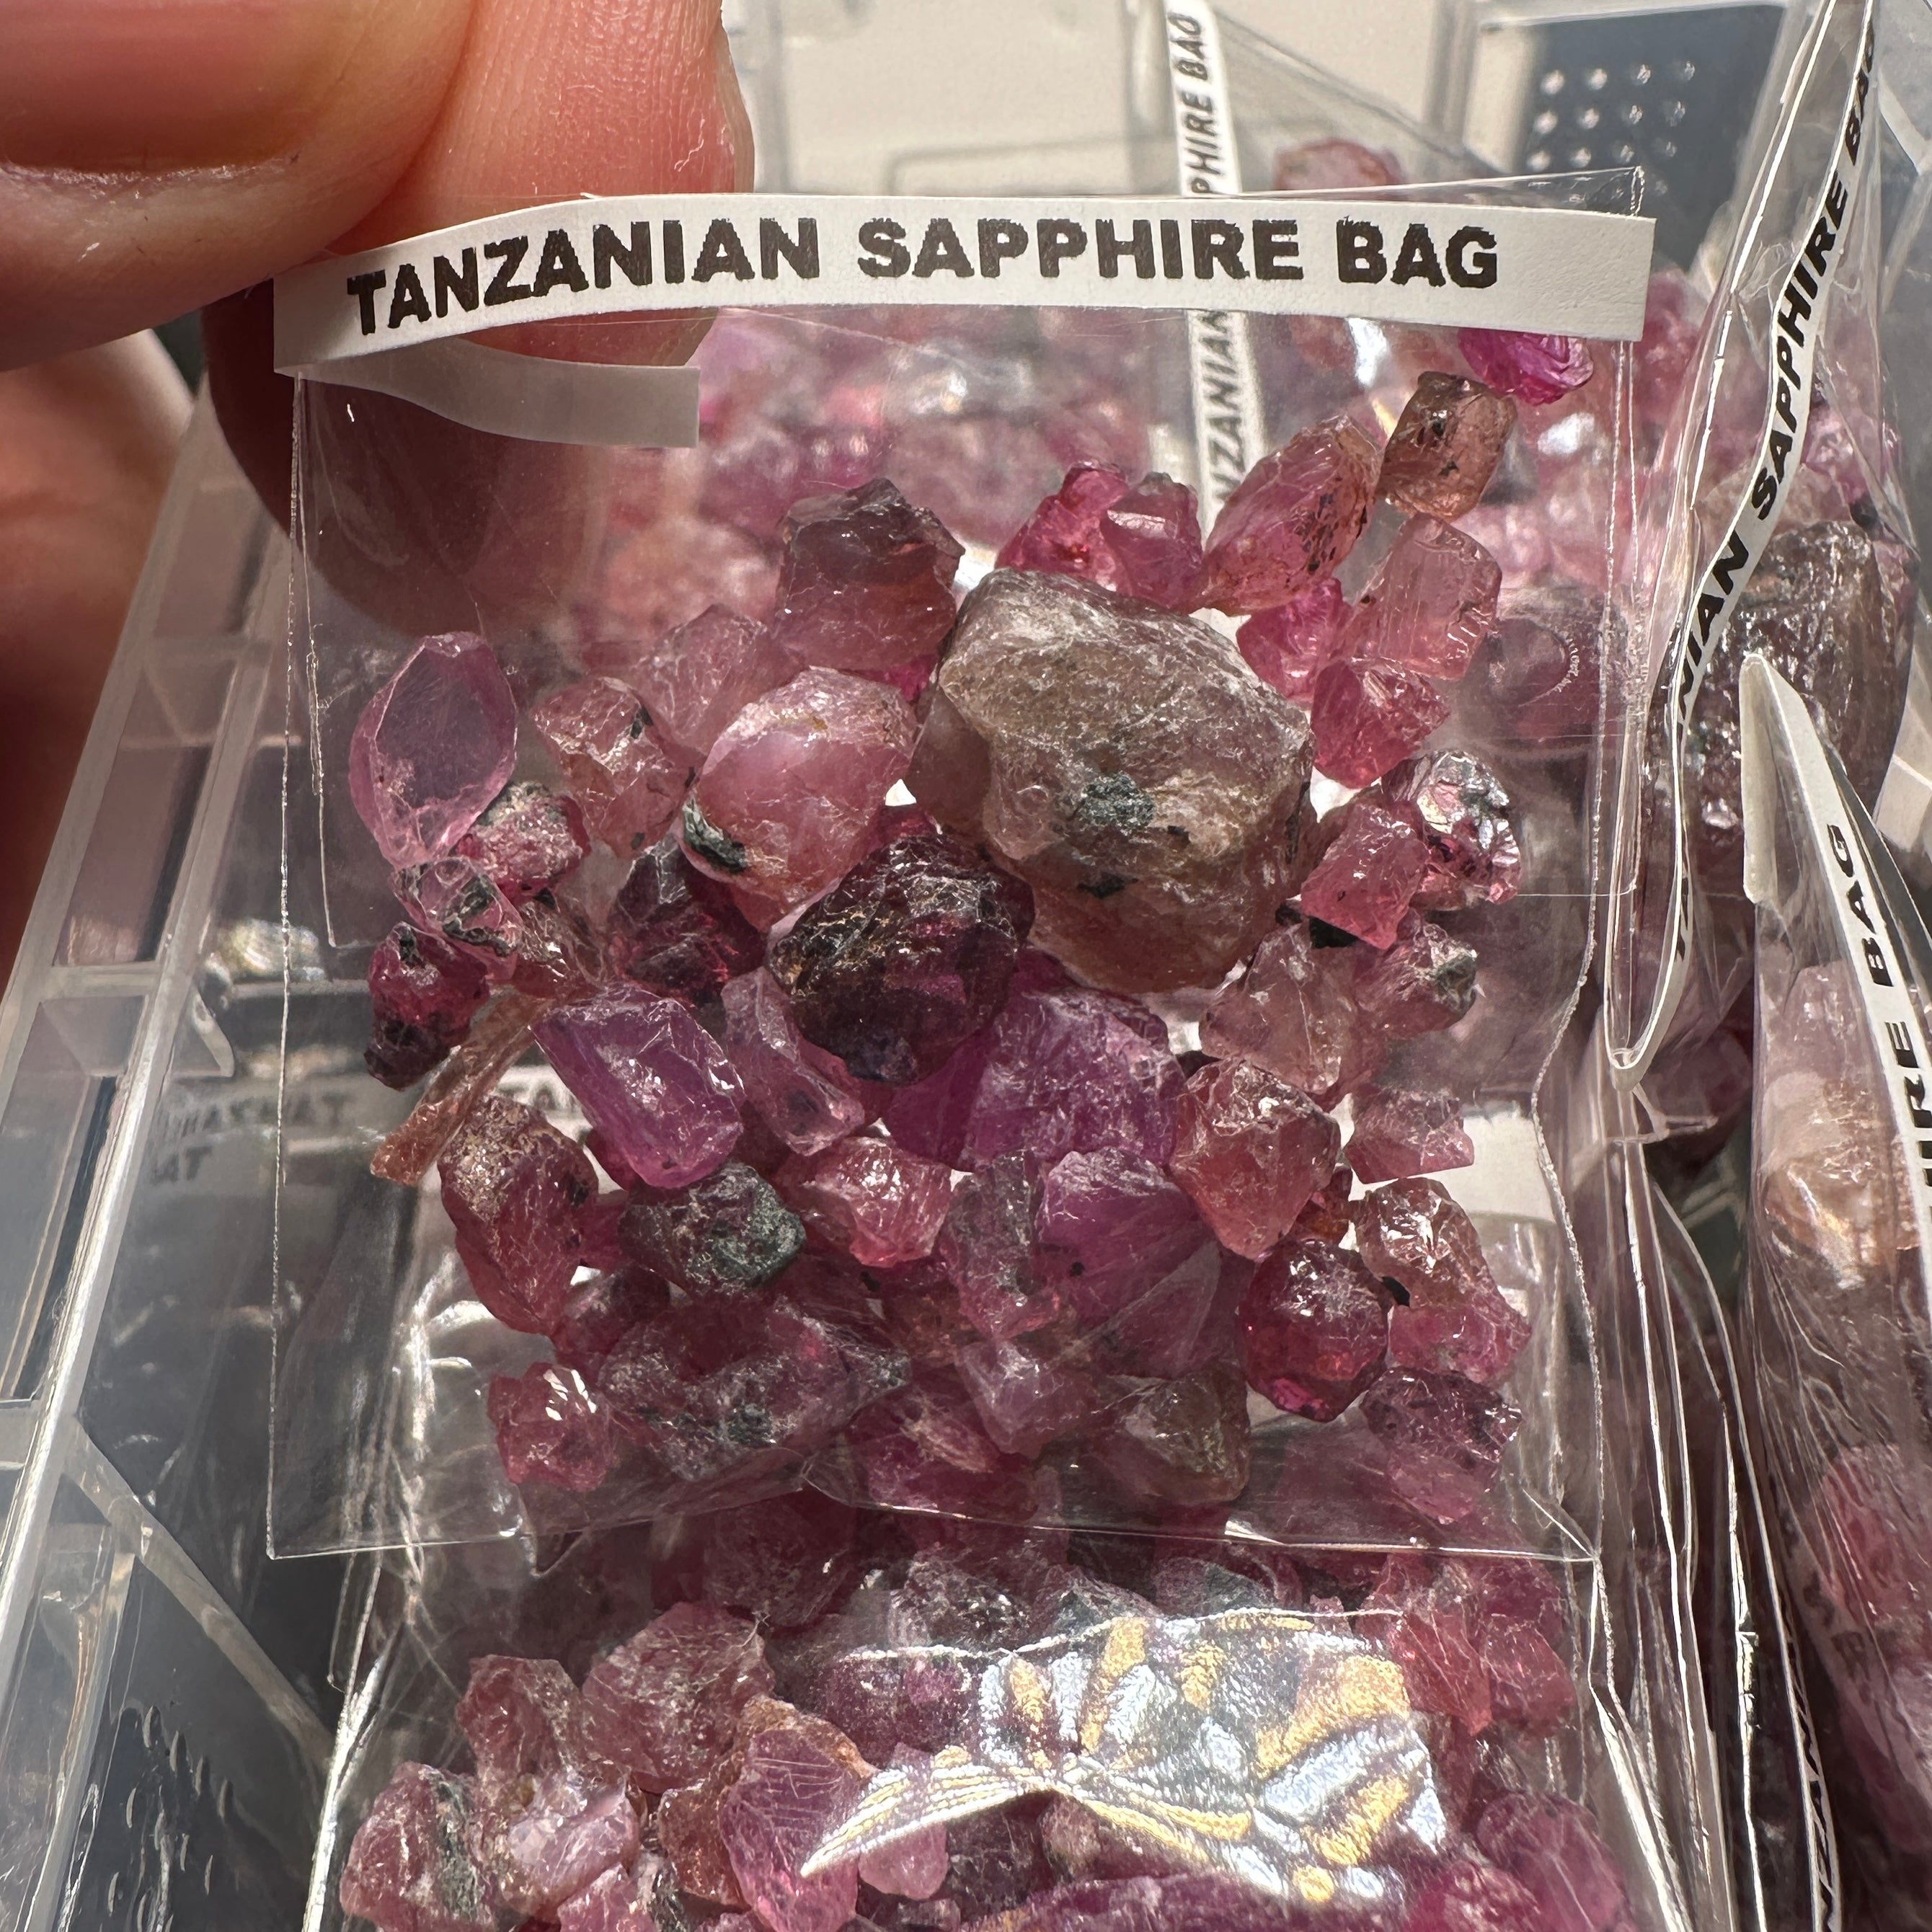 Sapphire Bag, Tanzania